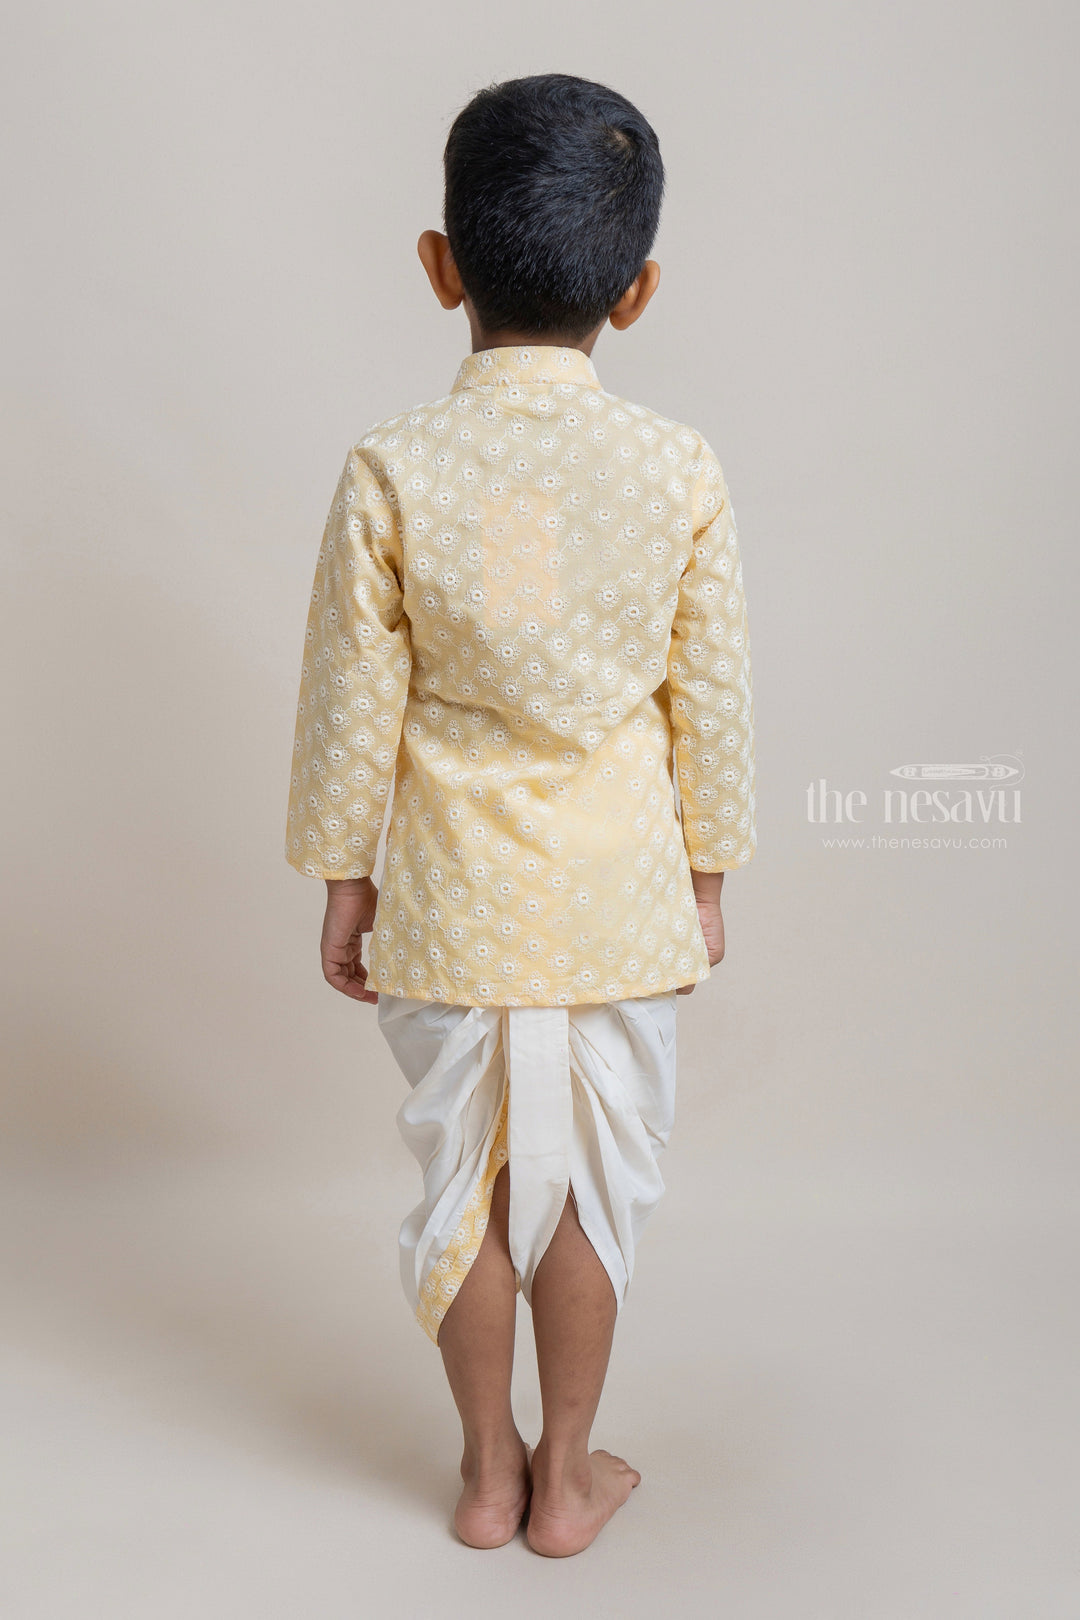 The Nesavu Boys Dothi Set Embroidery Yellow Ethnic Kurta With White Dhoti For Boys Nesavu Premium Yellow Kurta For Boys | Ethnic Wear Collection | The Nesavu